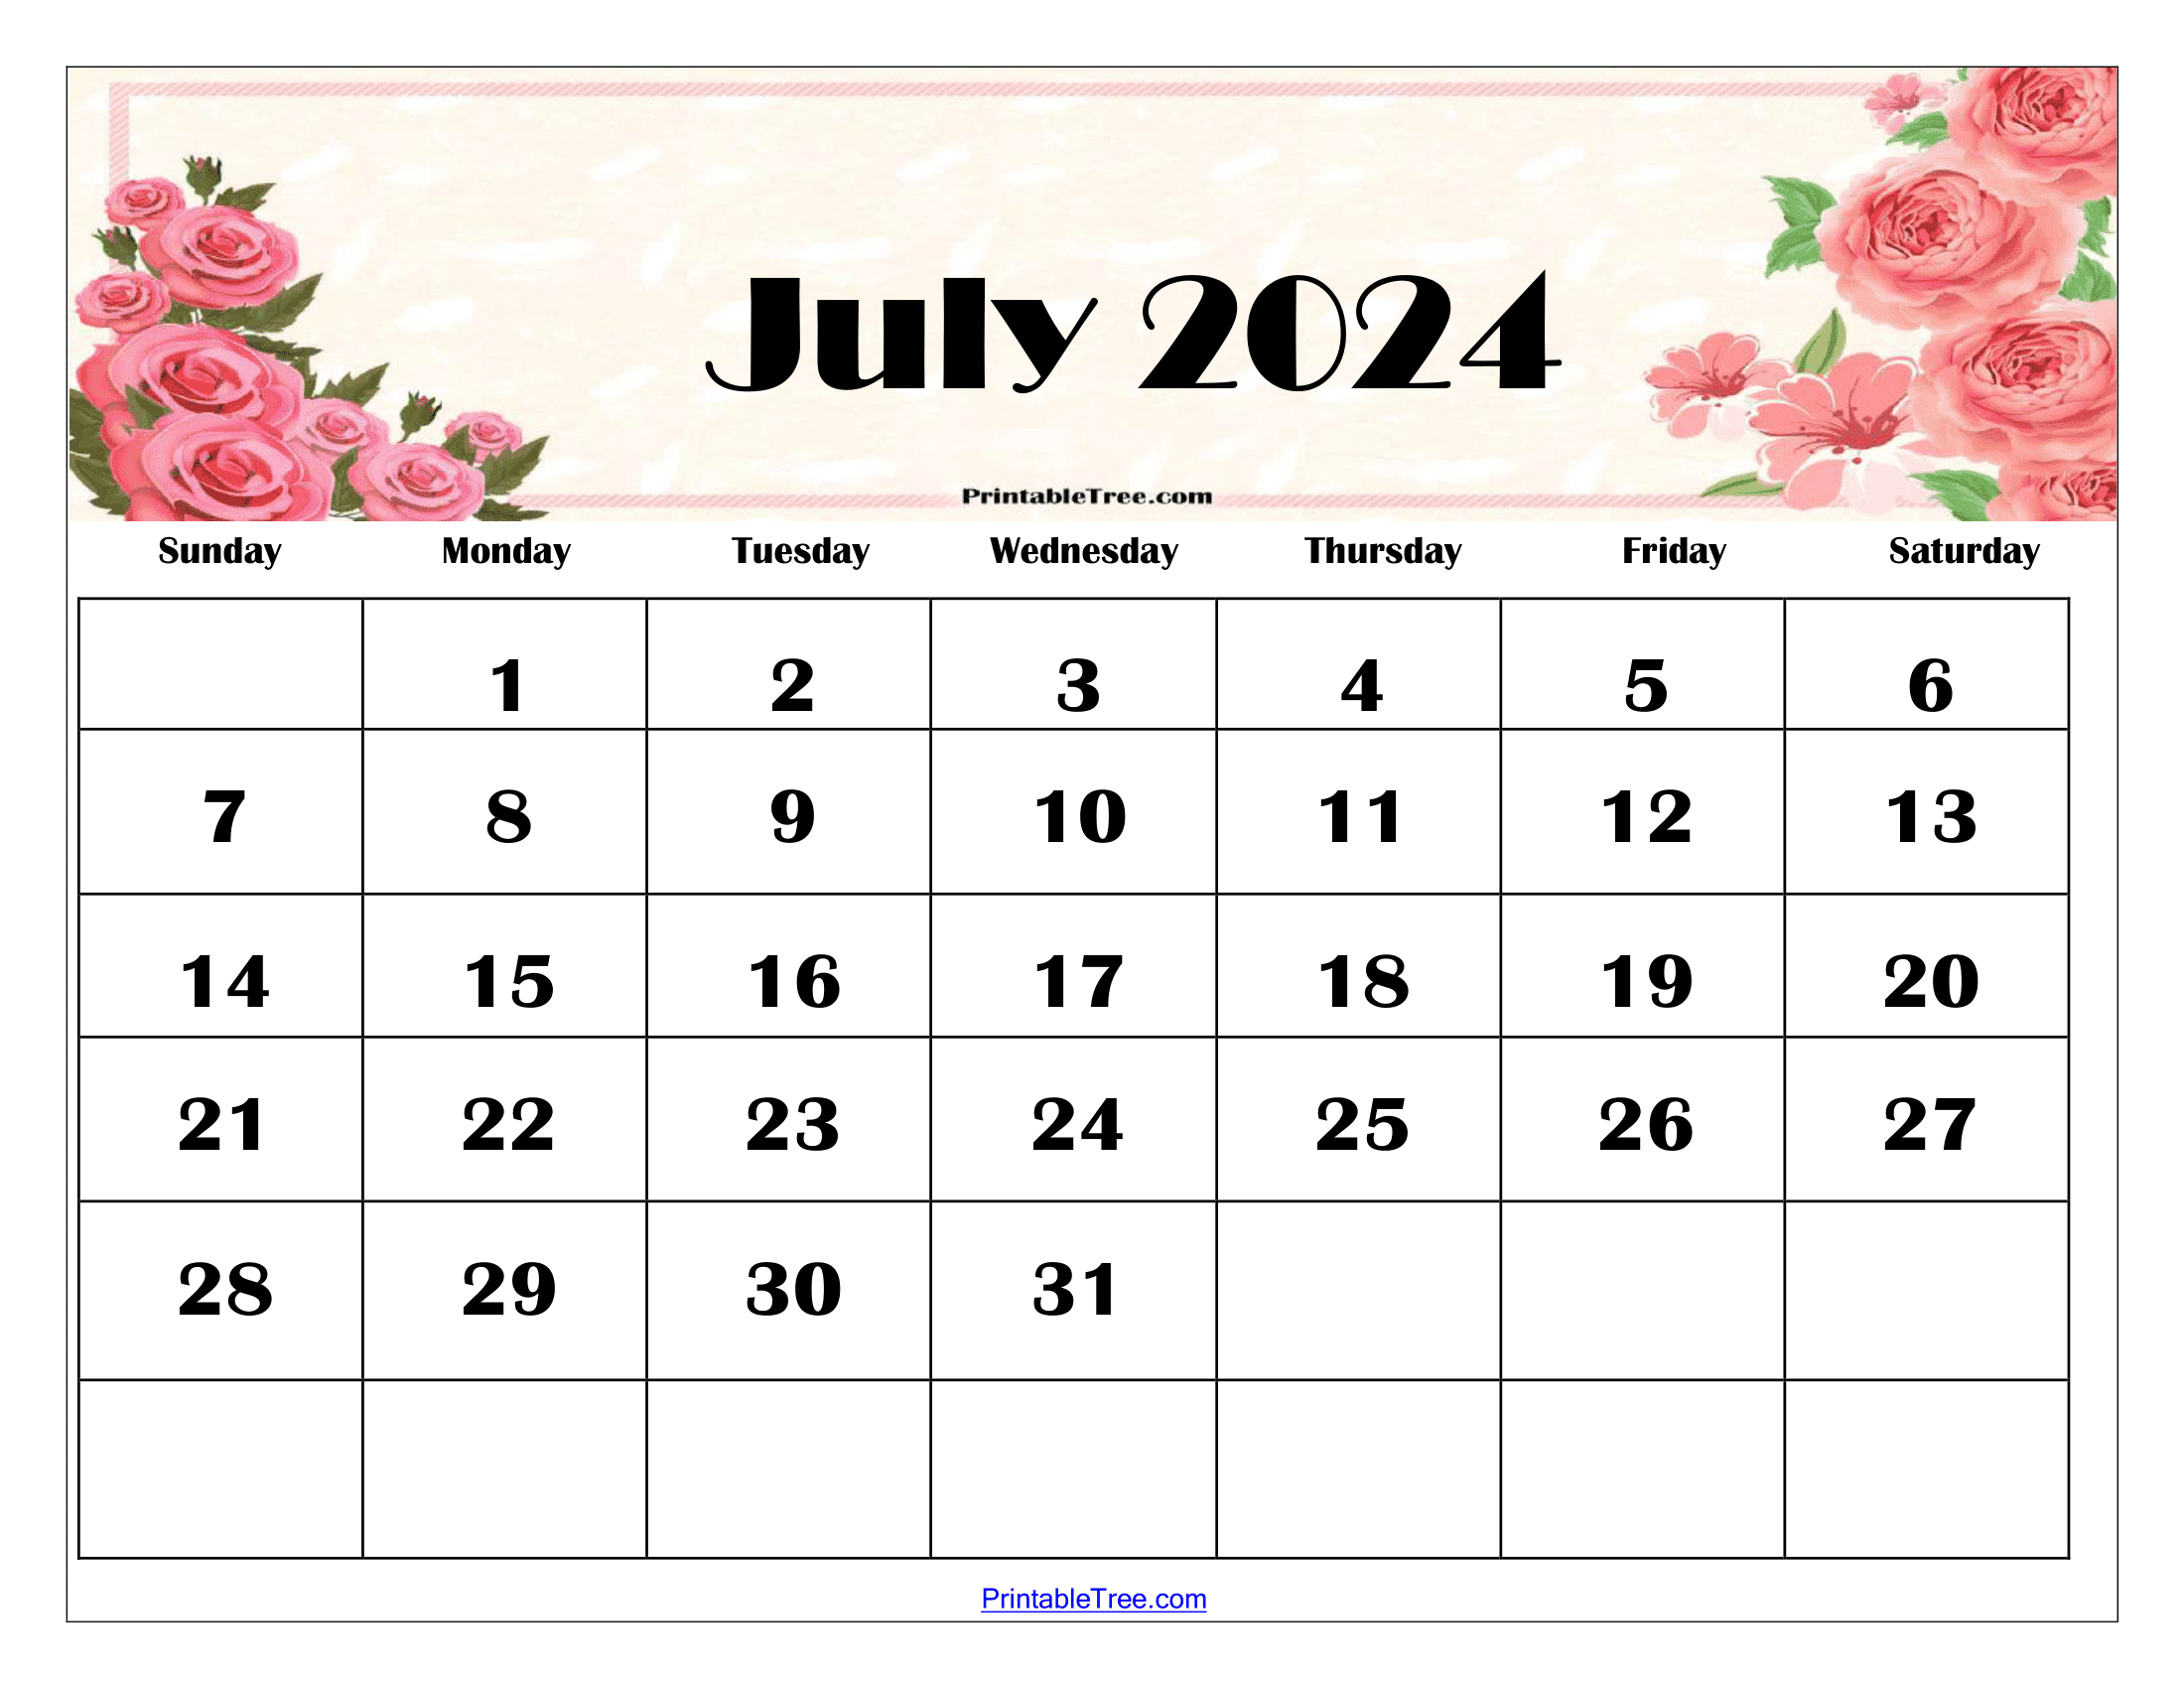 July 2024 Calendar Printable Pdf With Holidays Free Template | July 2024 Calendar Printable